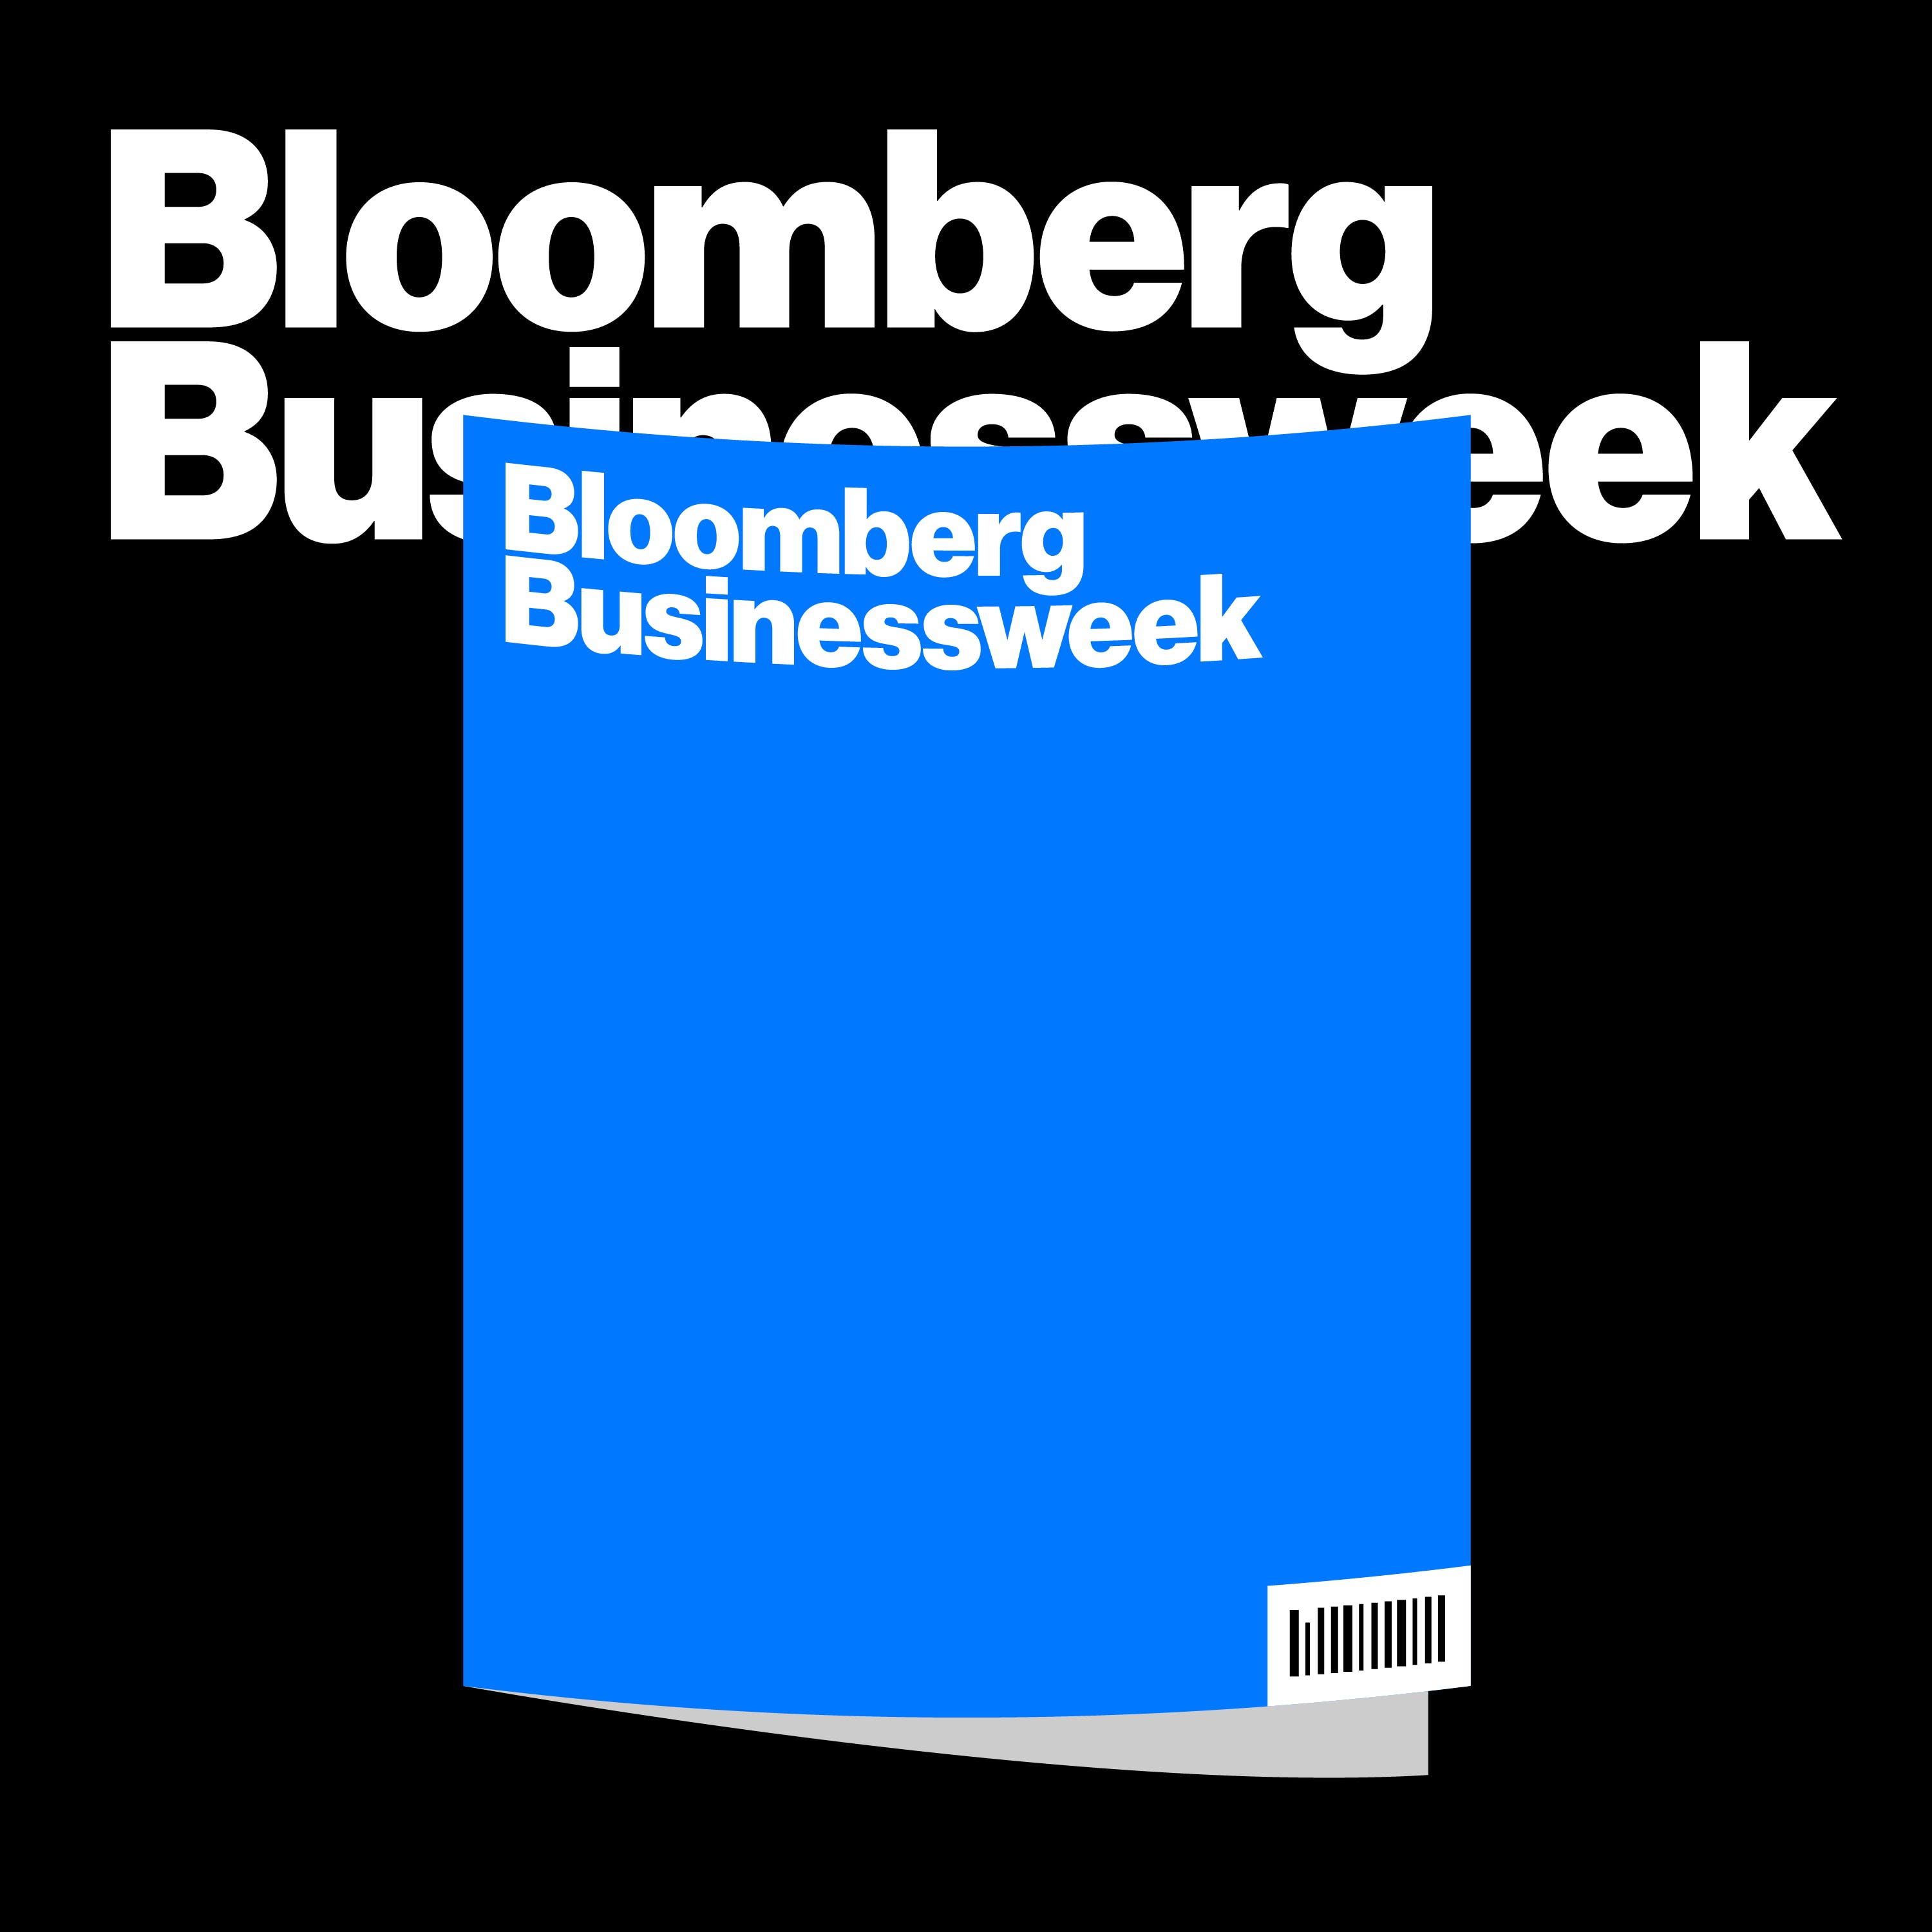 Bloomberg Markets: Zlomek on VC Deals, Wang on Amazon News